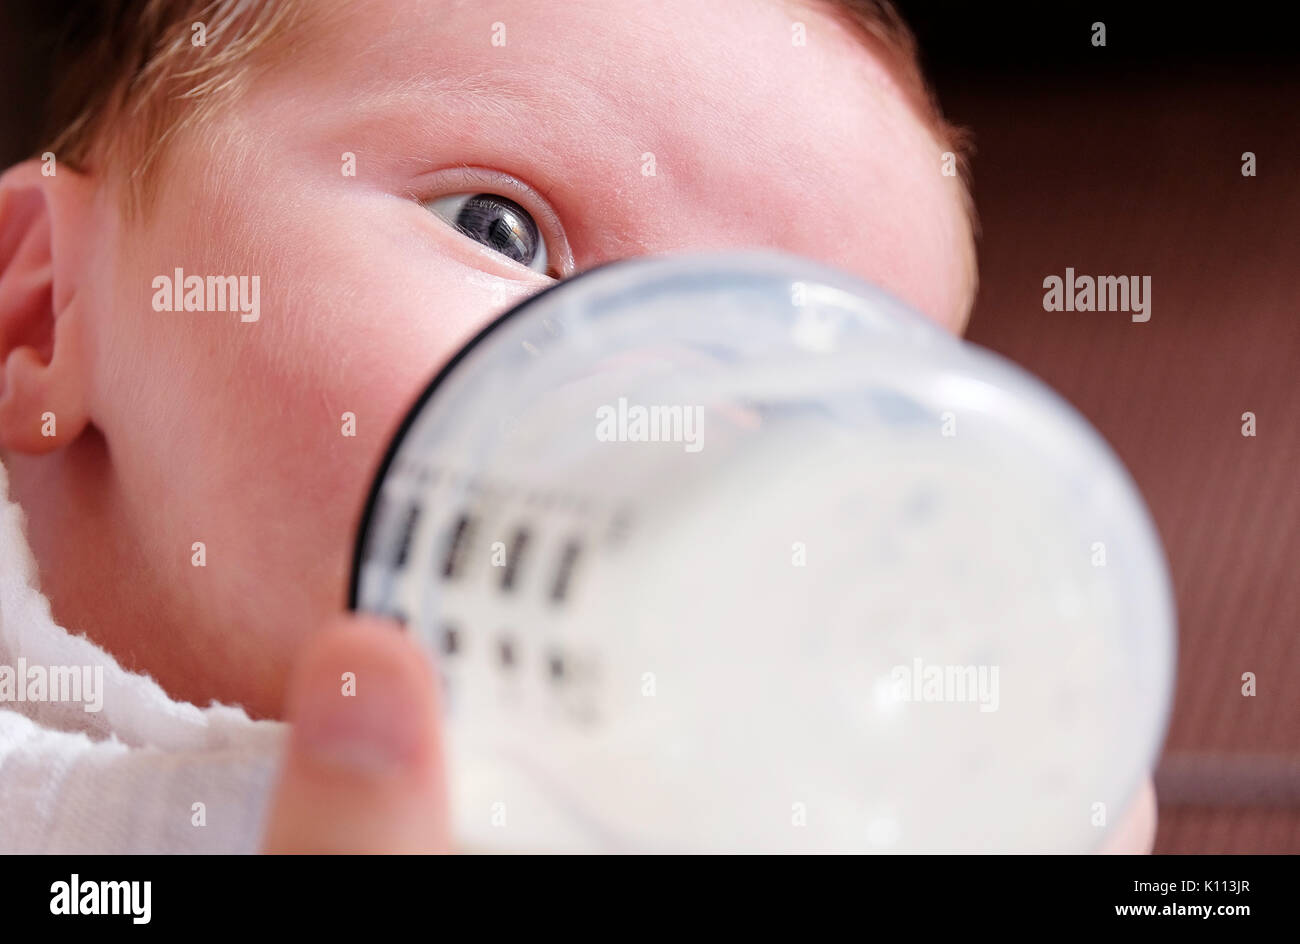 baby feeding from bottle Stock Photo